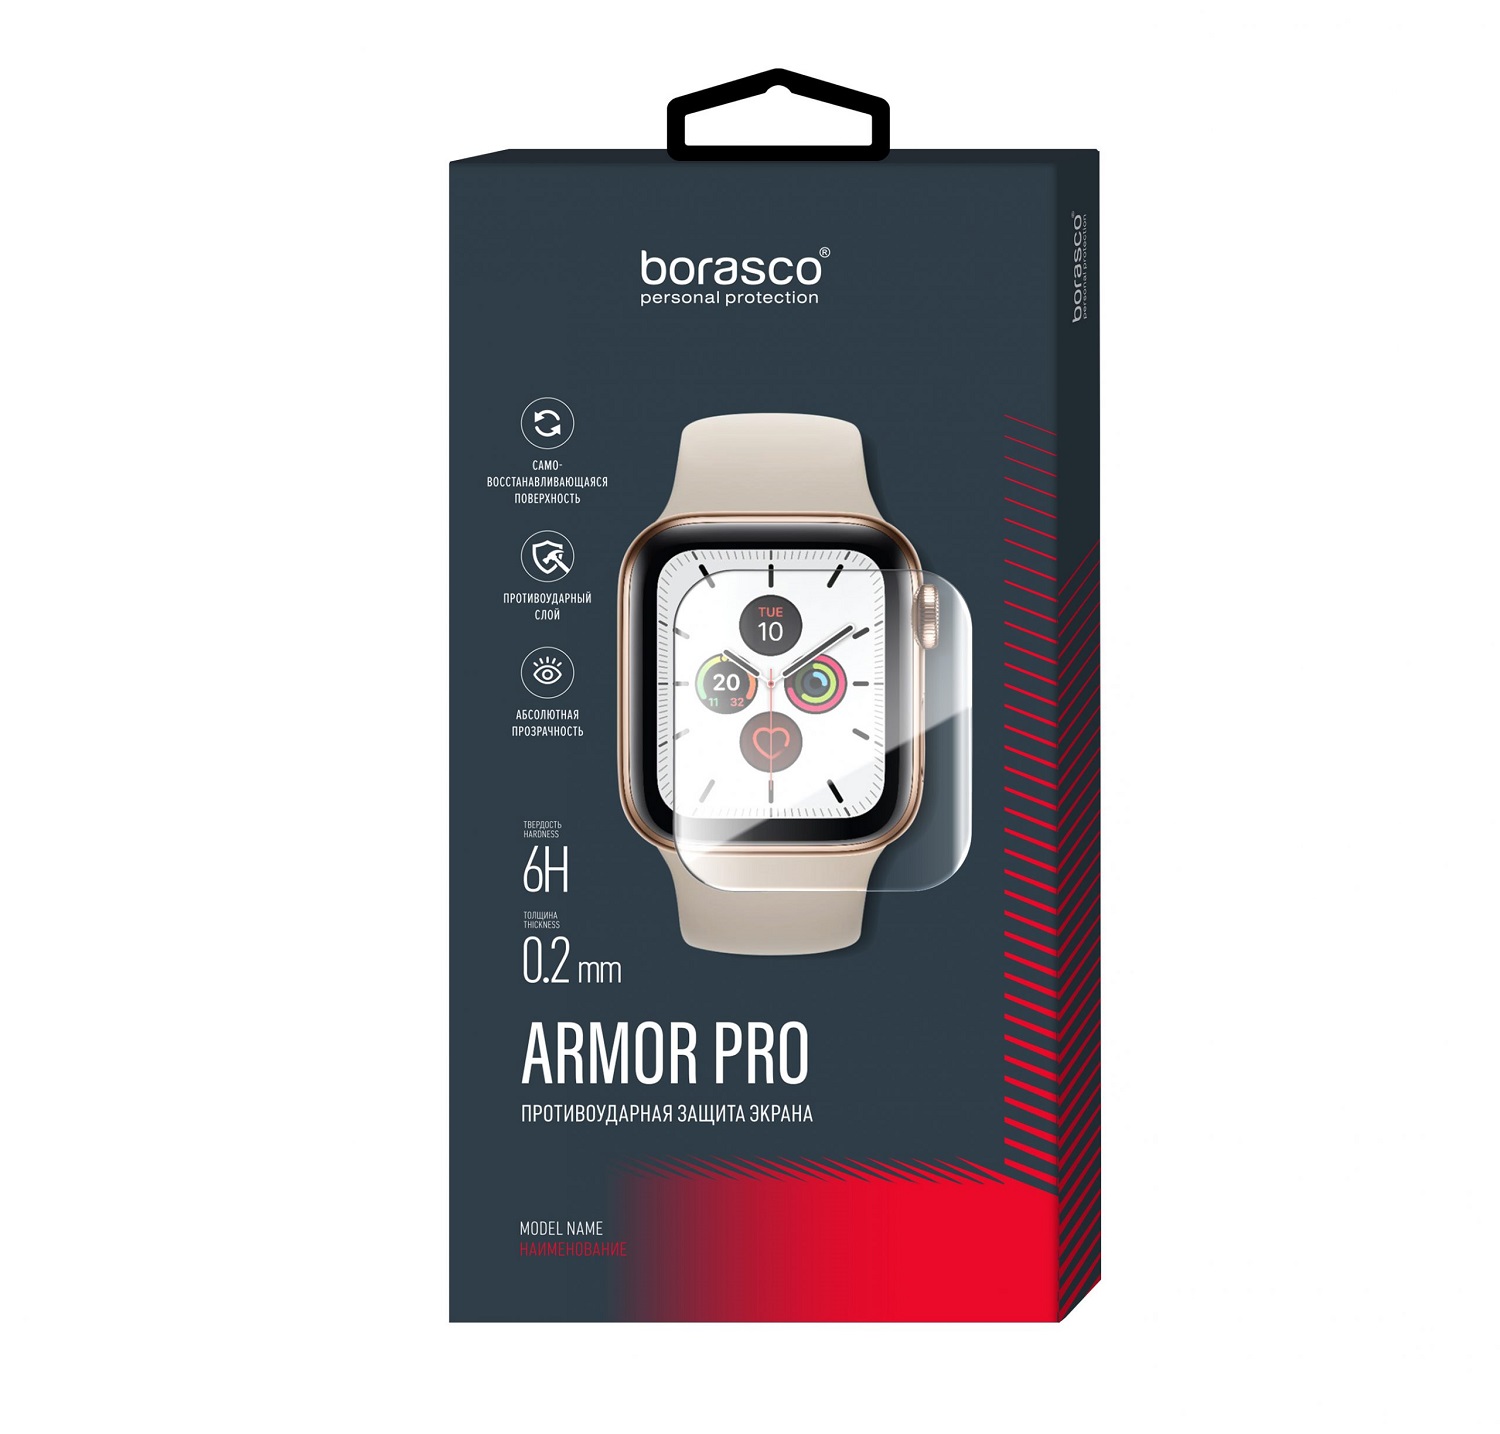 Защита экрана BoraSCO Armor Pro для Xiaomi Mi Watch Lite защита экрана borasco armor pro для honor watch se